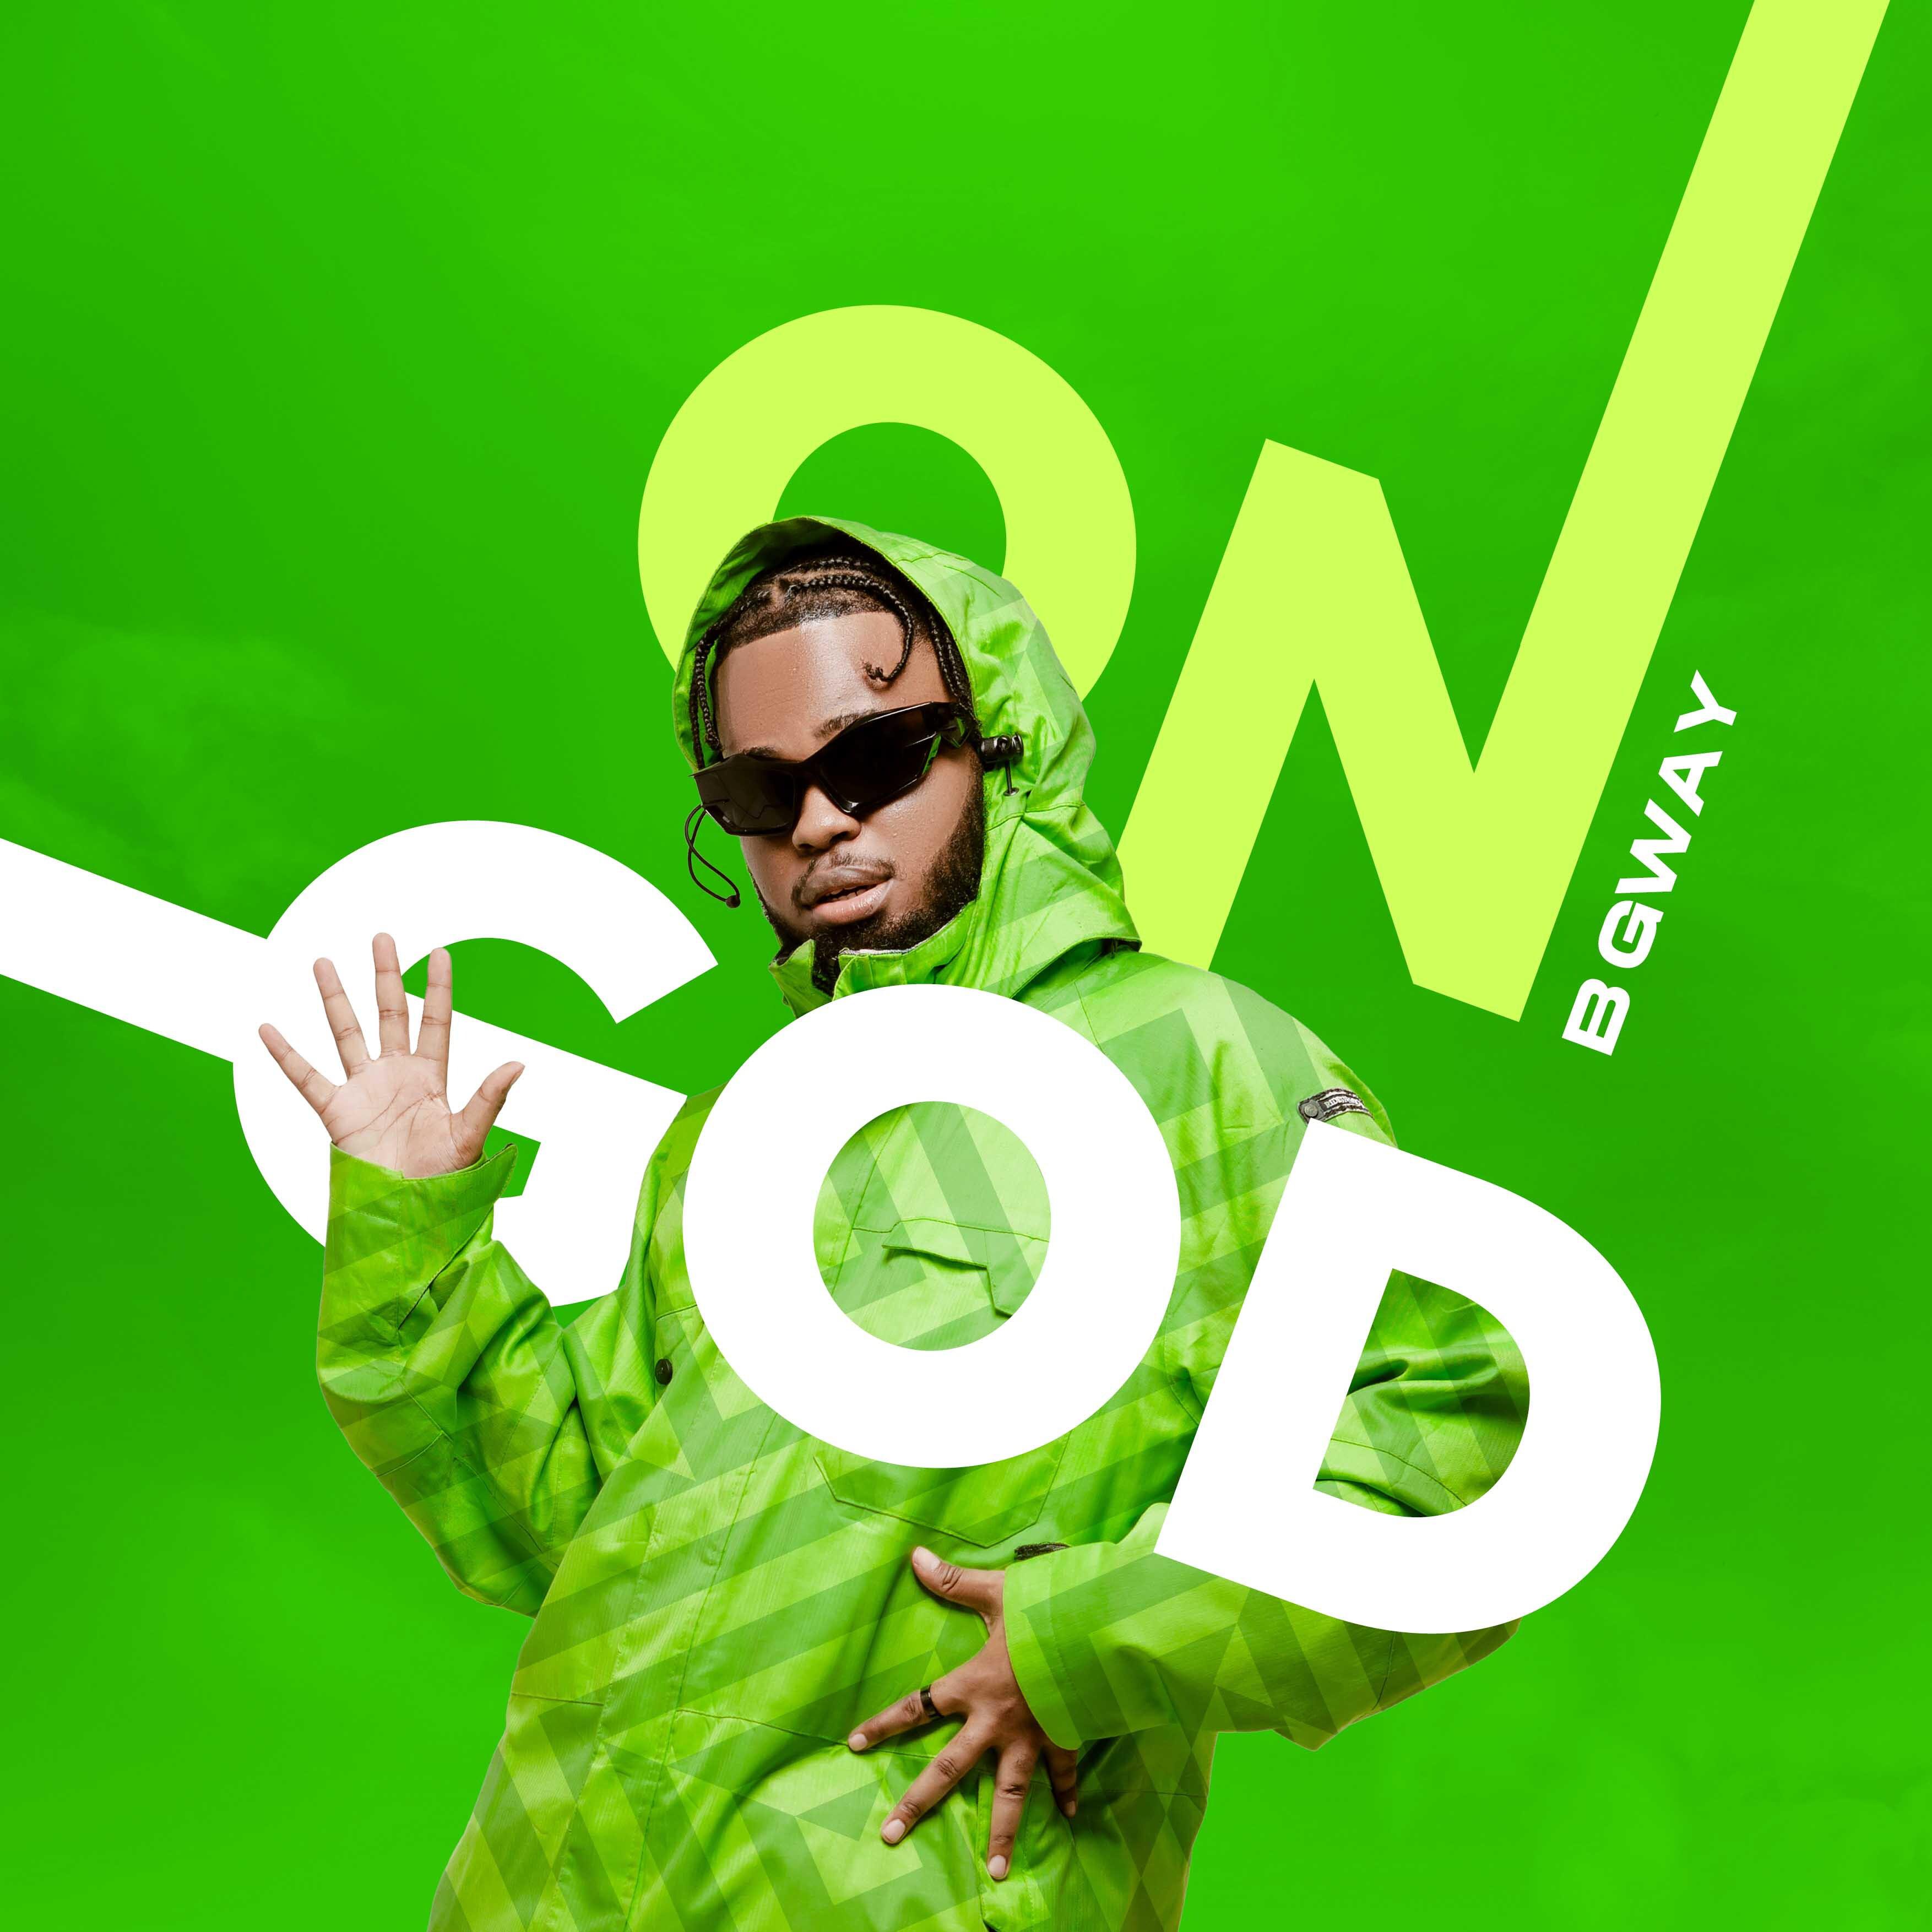 Постер альбома On God